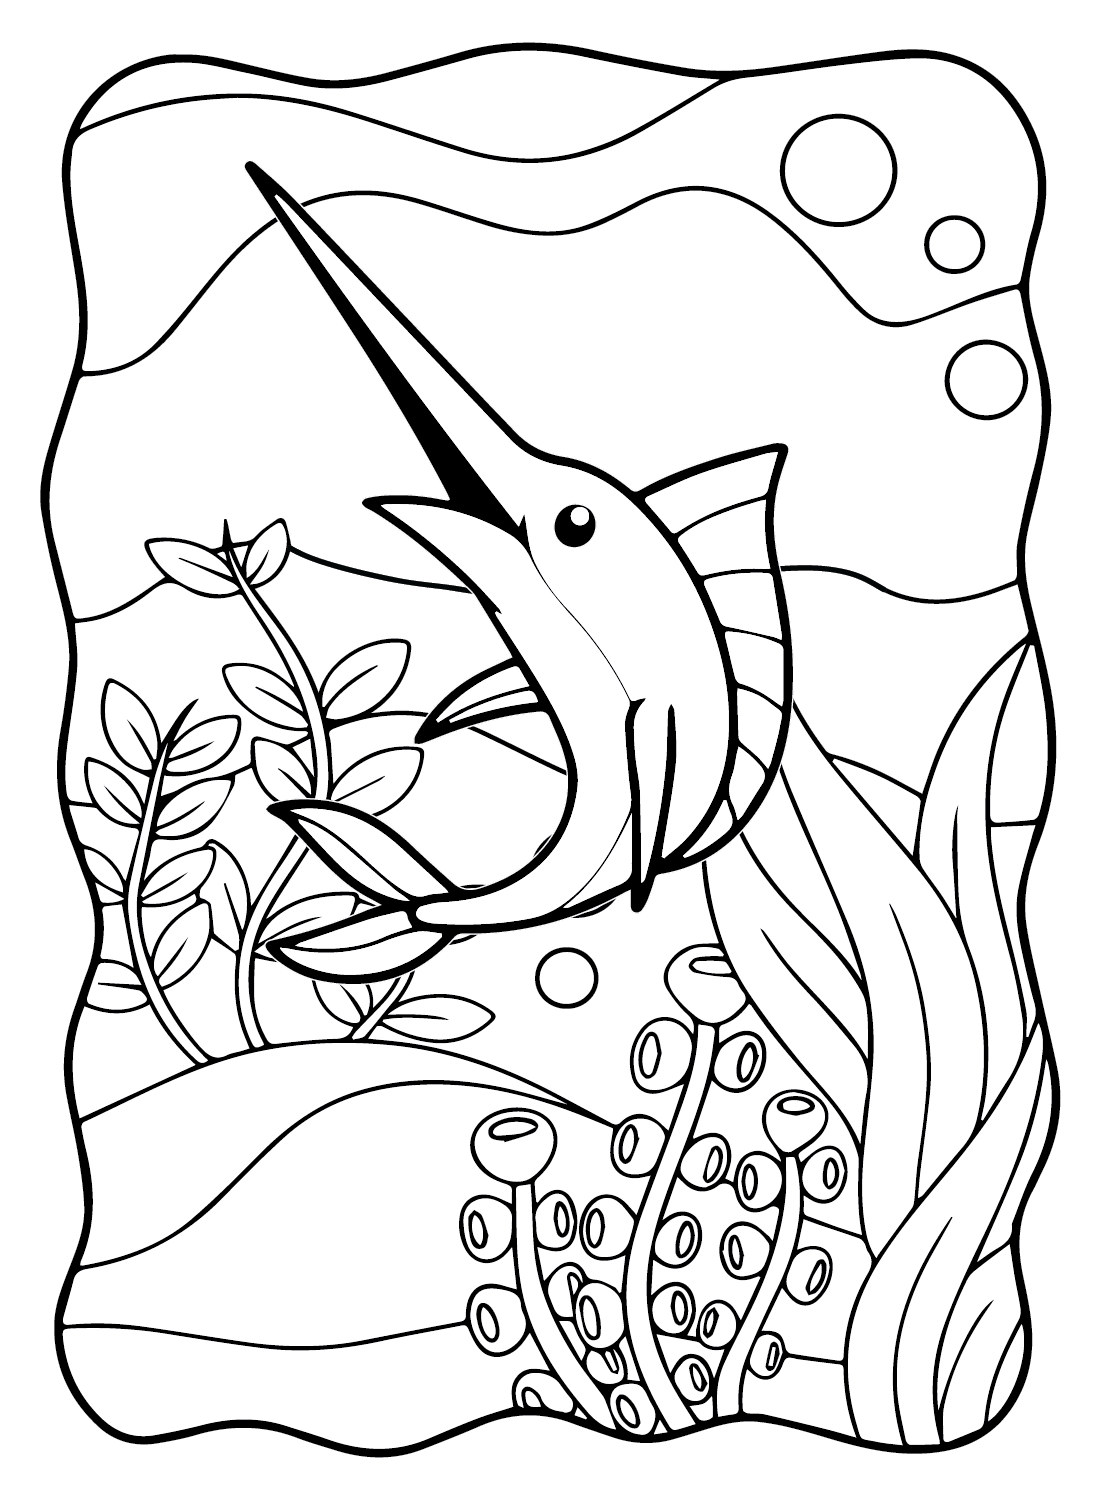 Marlin Fish Cartoon Animal Coloring Page - Free Printable Coloring Pages